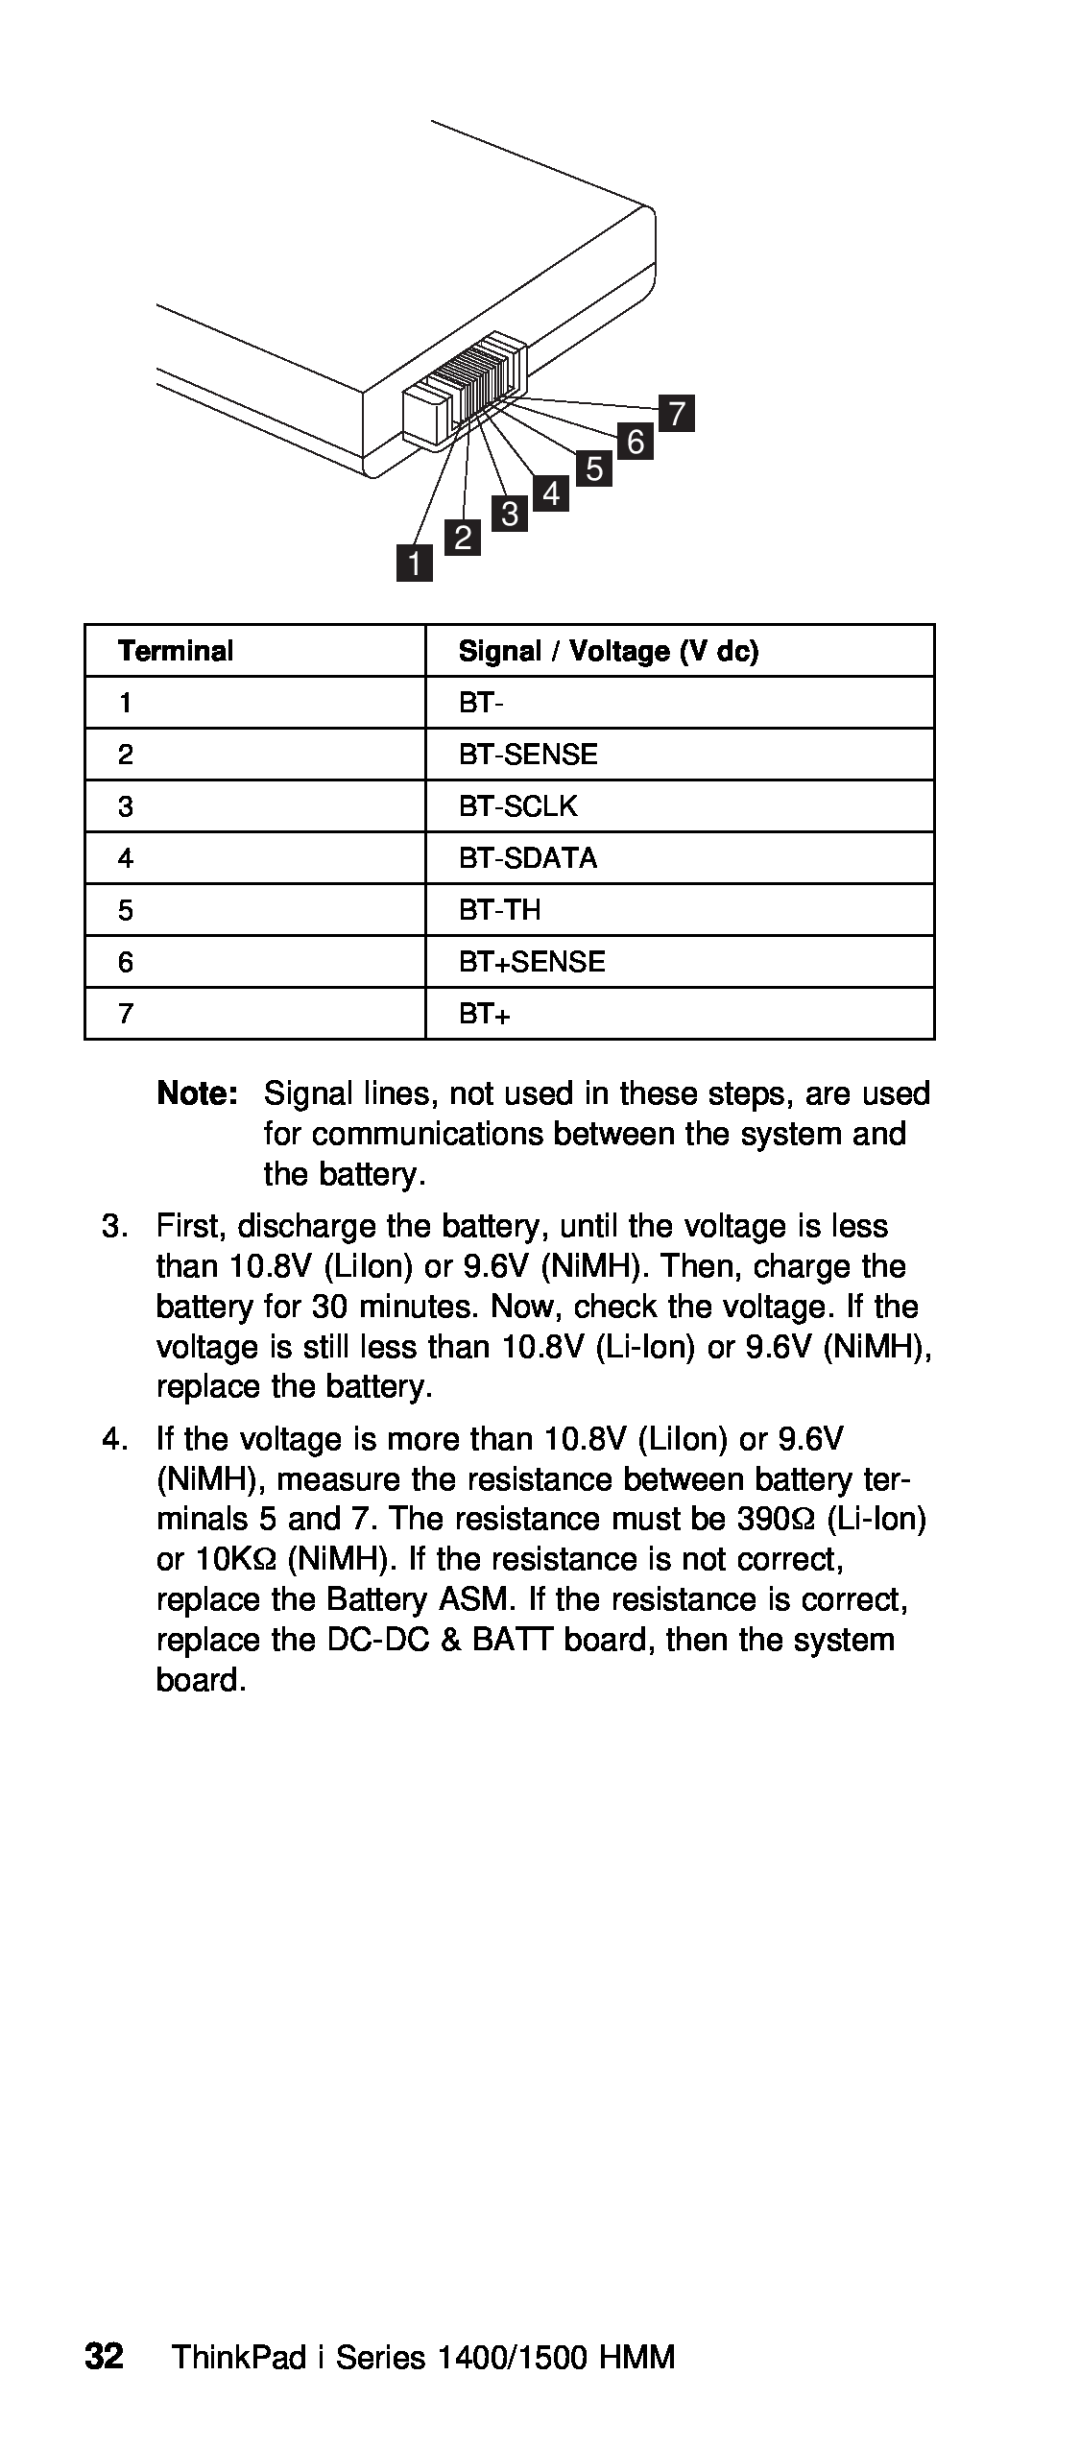 IBM Series 1500, Series 1400 manual Note Signal, Terminal, Signal / Voltage V dc 